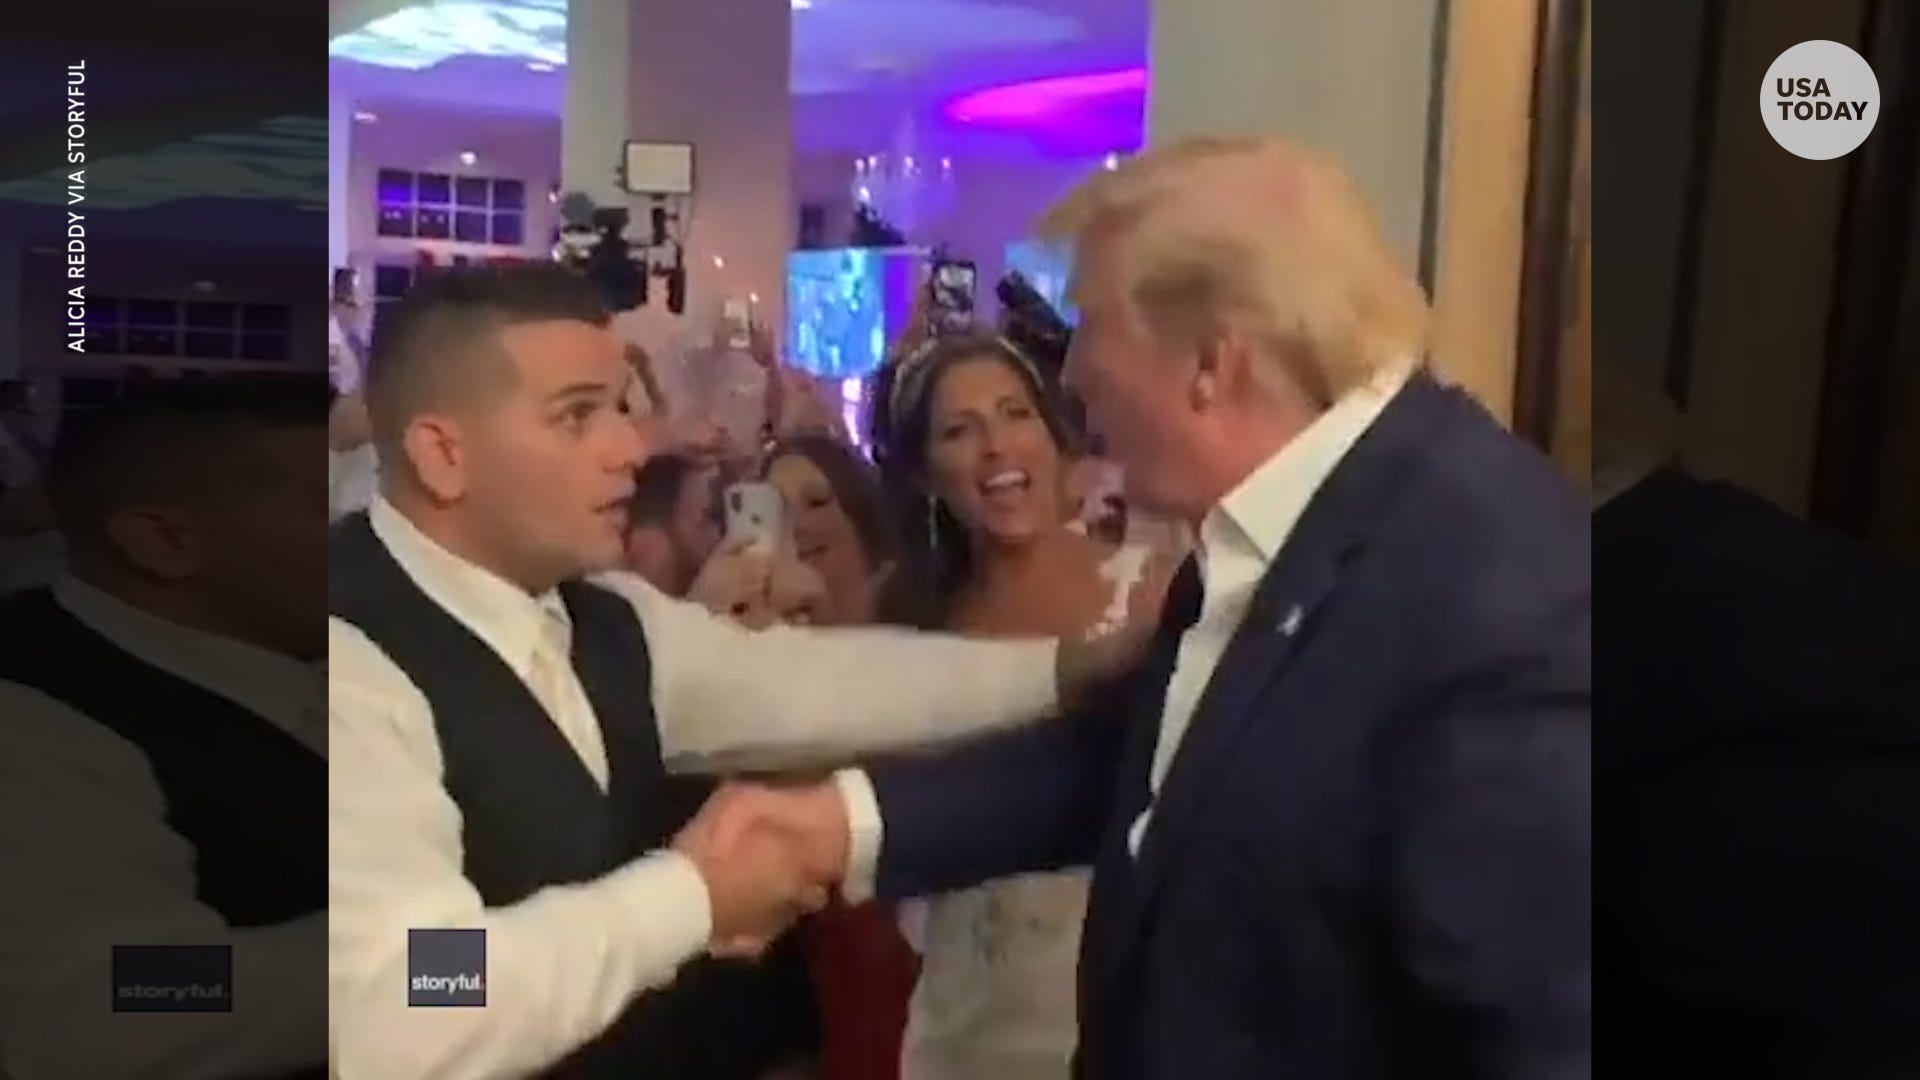 President Donald Trump Crashes Wedding At His Bedminster Golf Club